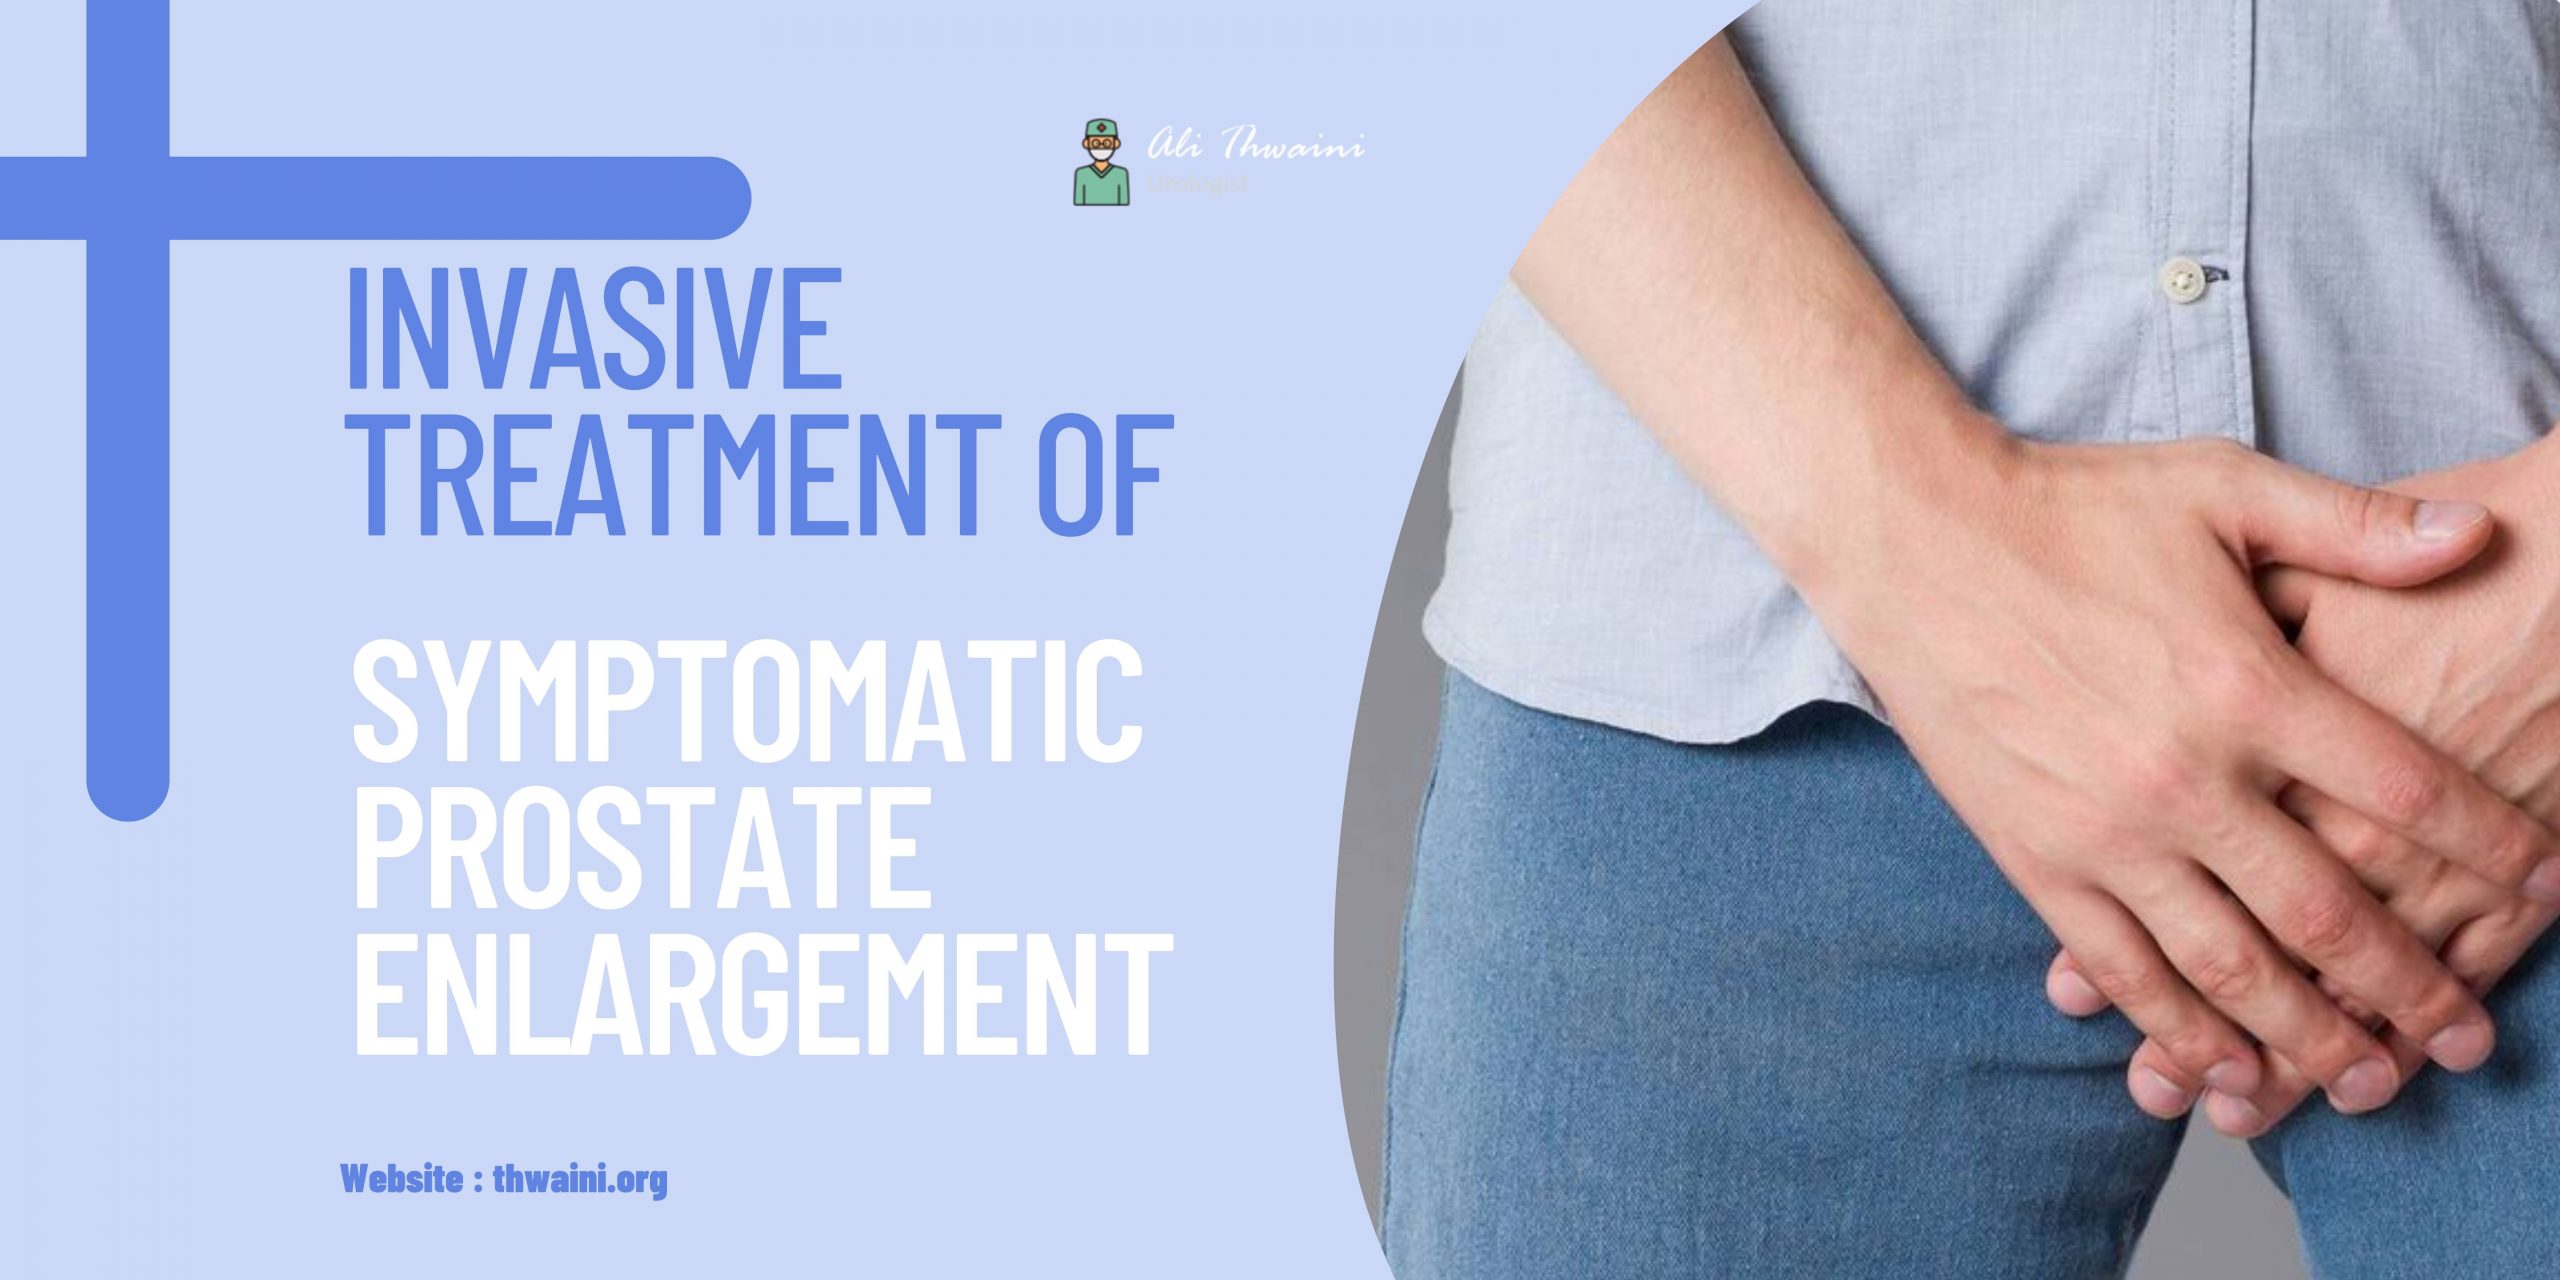 Treatment of Symptomatic prostate enlargement